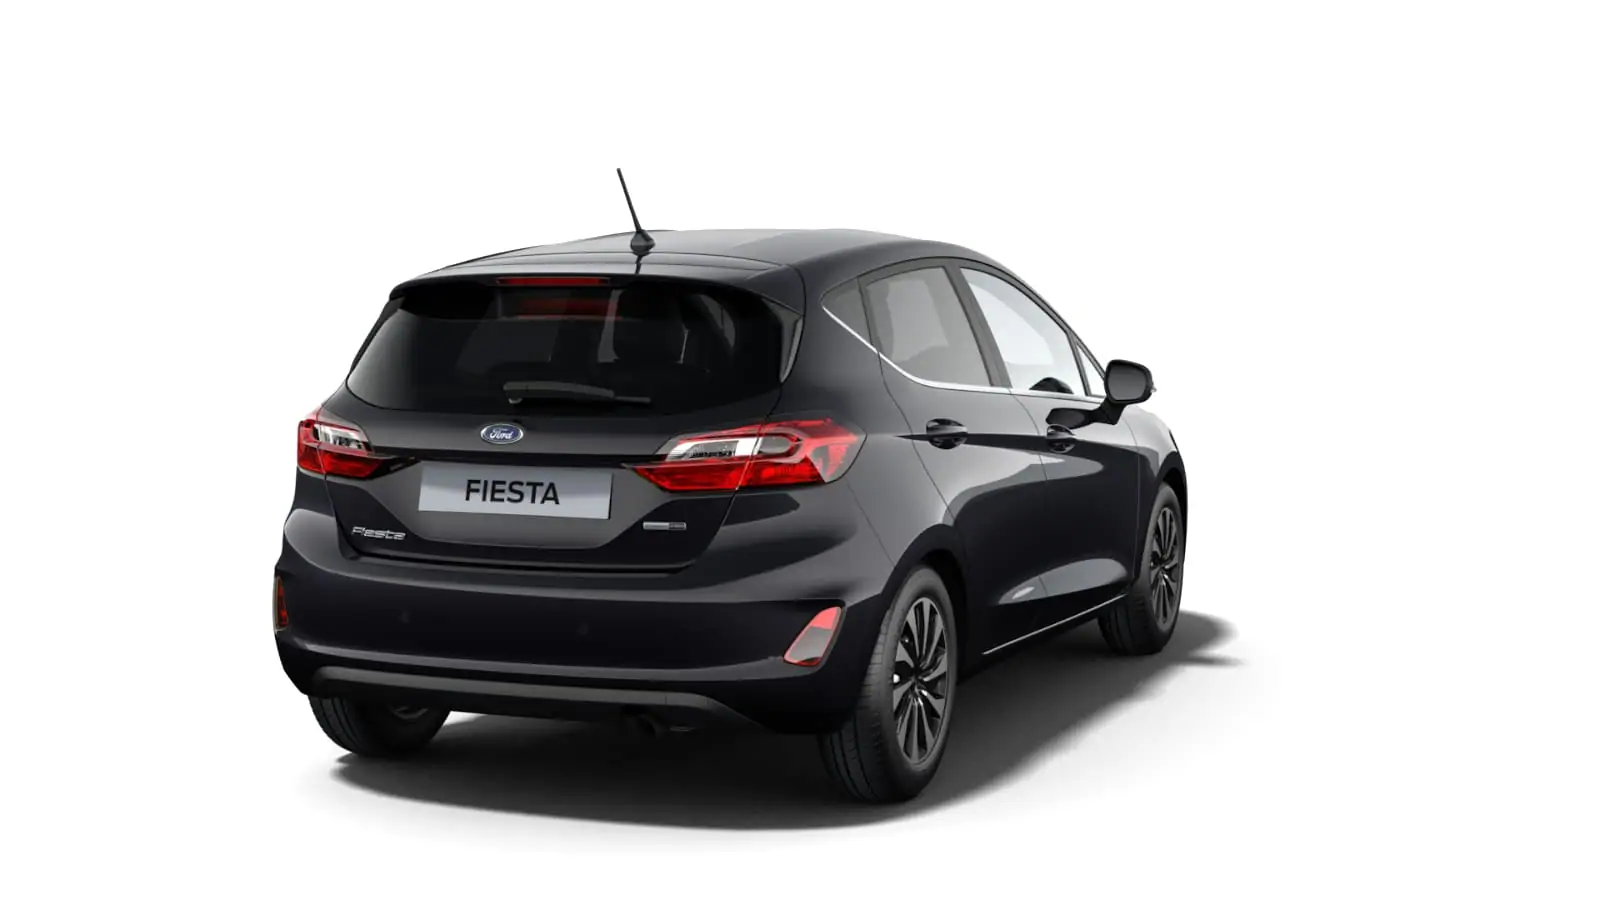 Nieuw Ford Fiesta mca Titanium 1.0i EcoBoost 100pk / 74 kW M6 JKD - Metaalkleur "Agate Black" 3